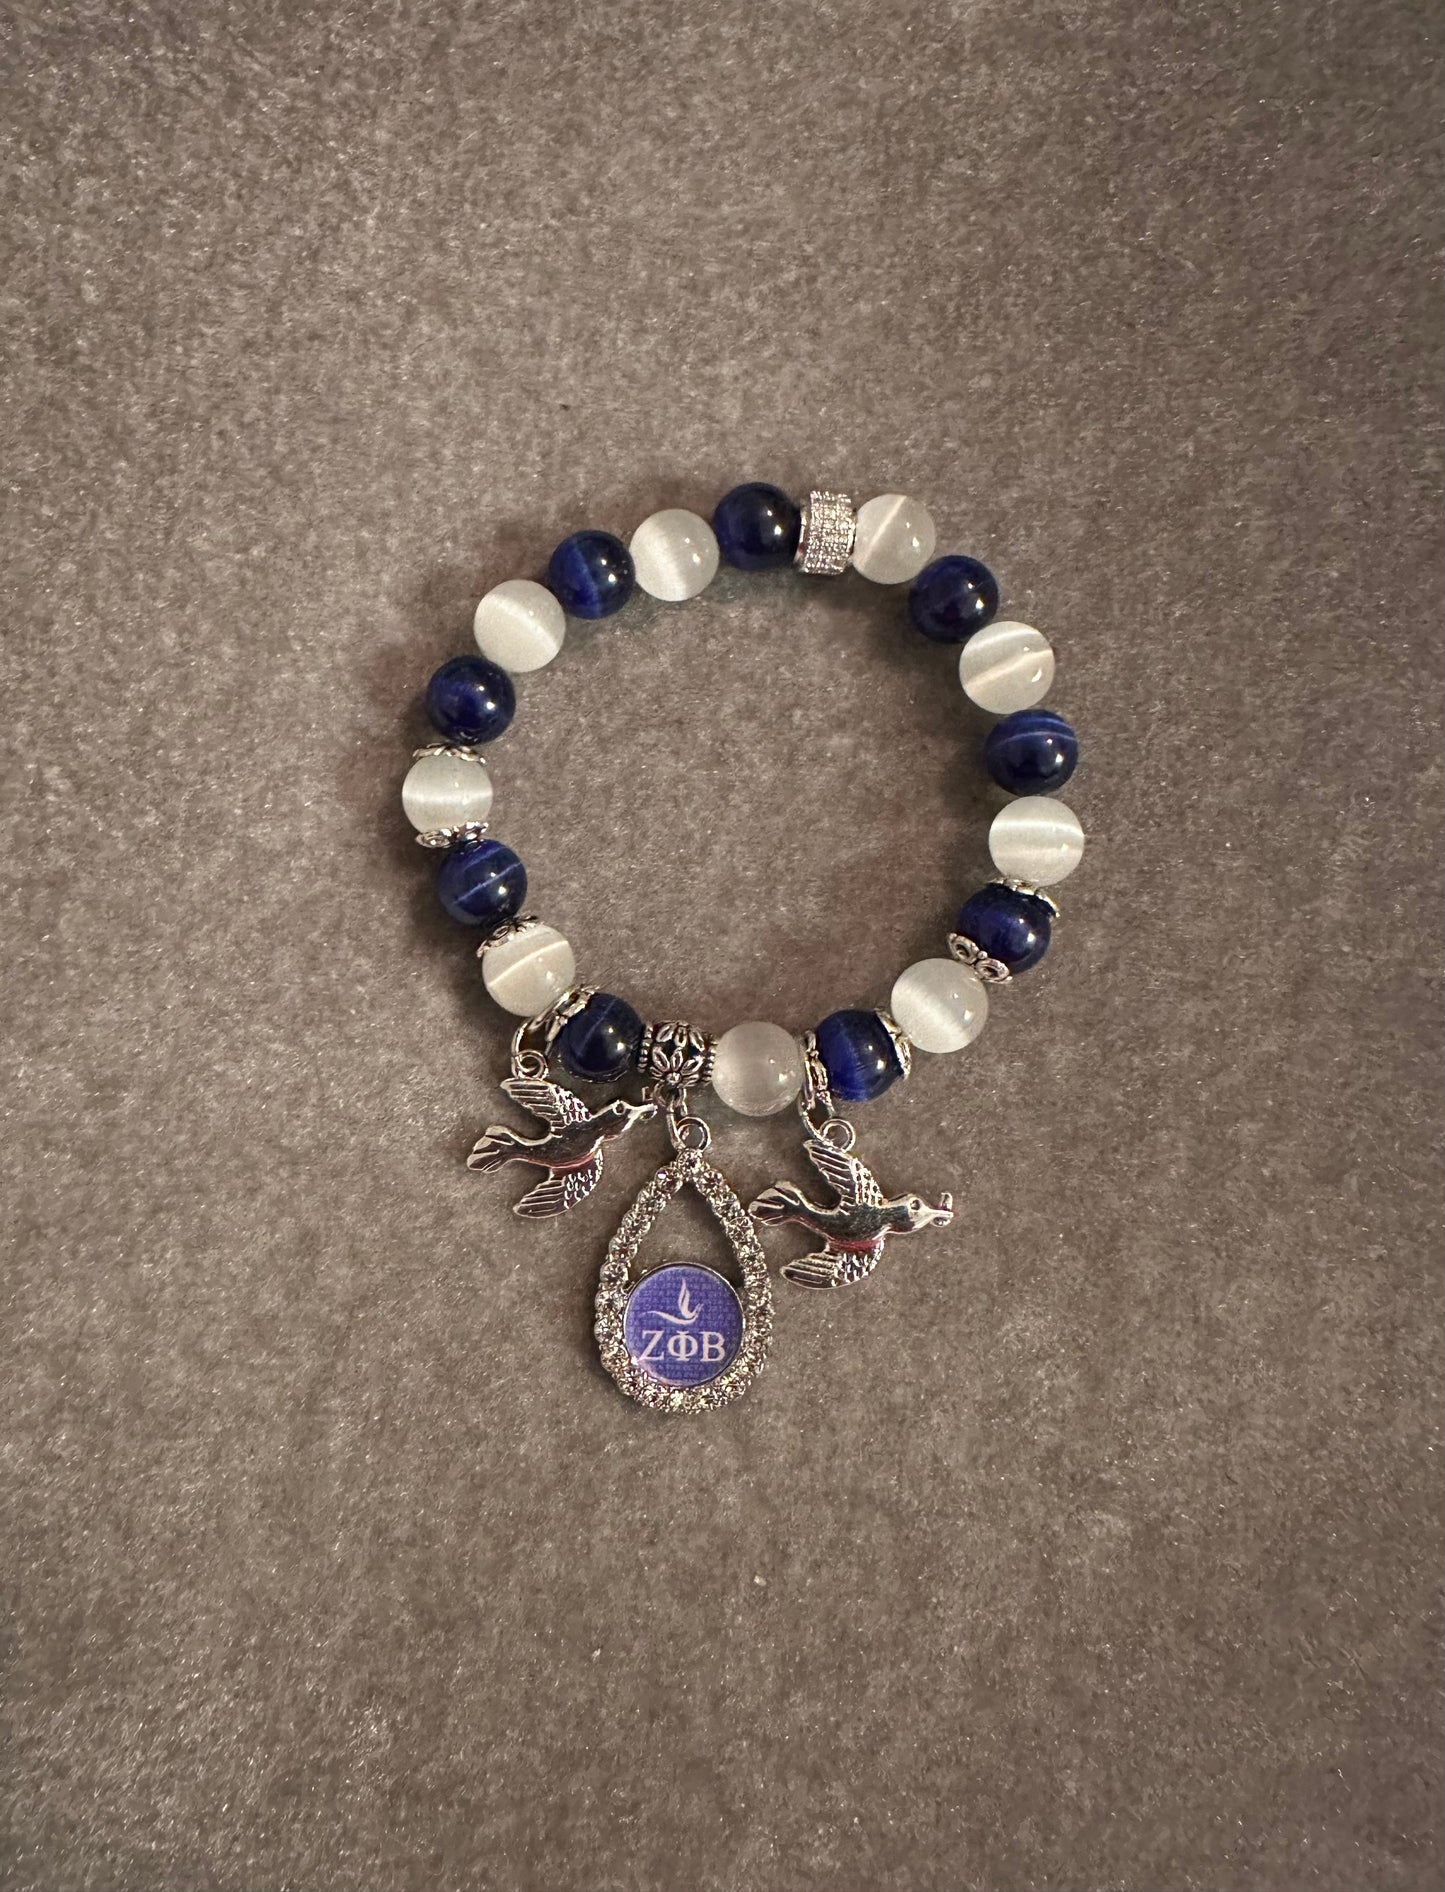 Divine 9 bead bracelet